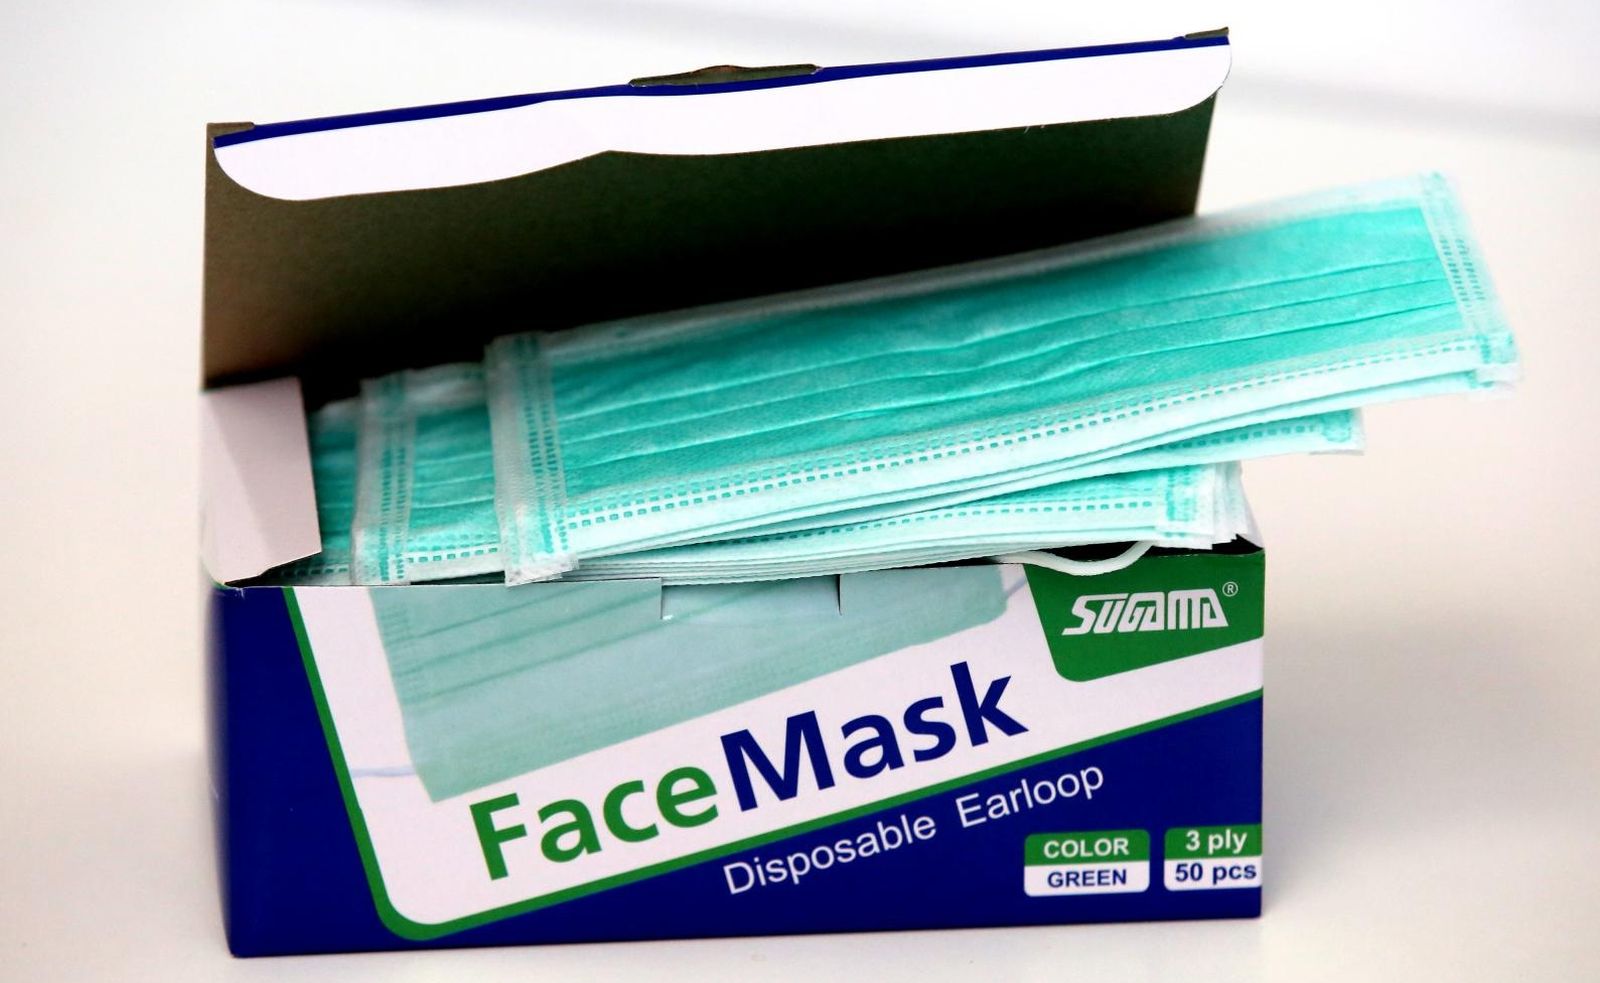 01.02.2020., Sibenik - Medicinska maska za lice. Photo: Dusko Jaramaz/PIXSELL